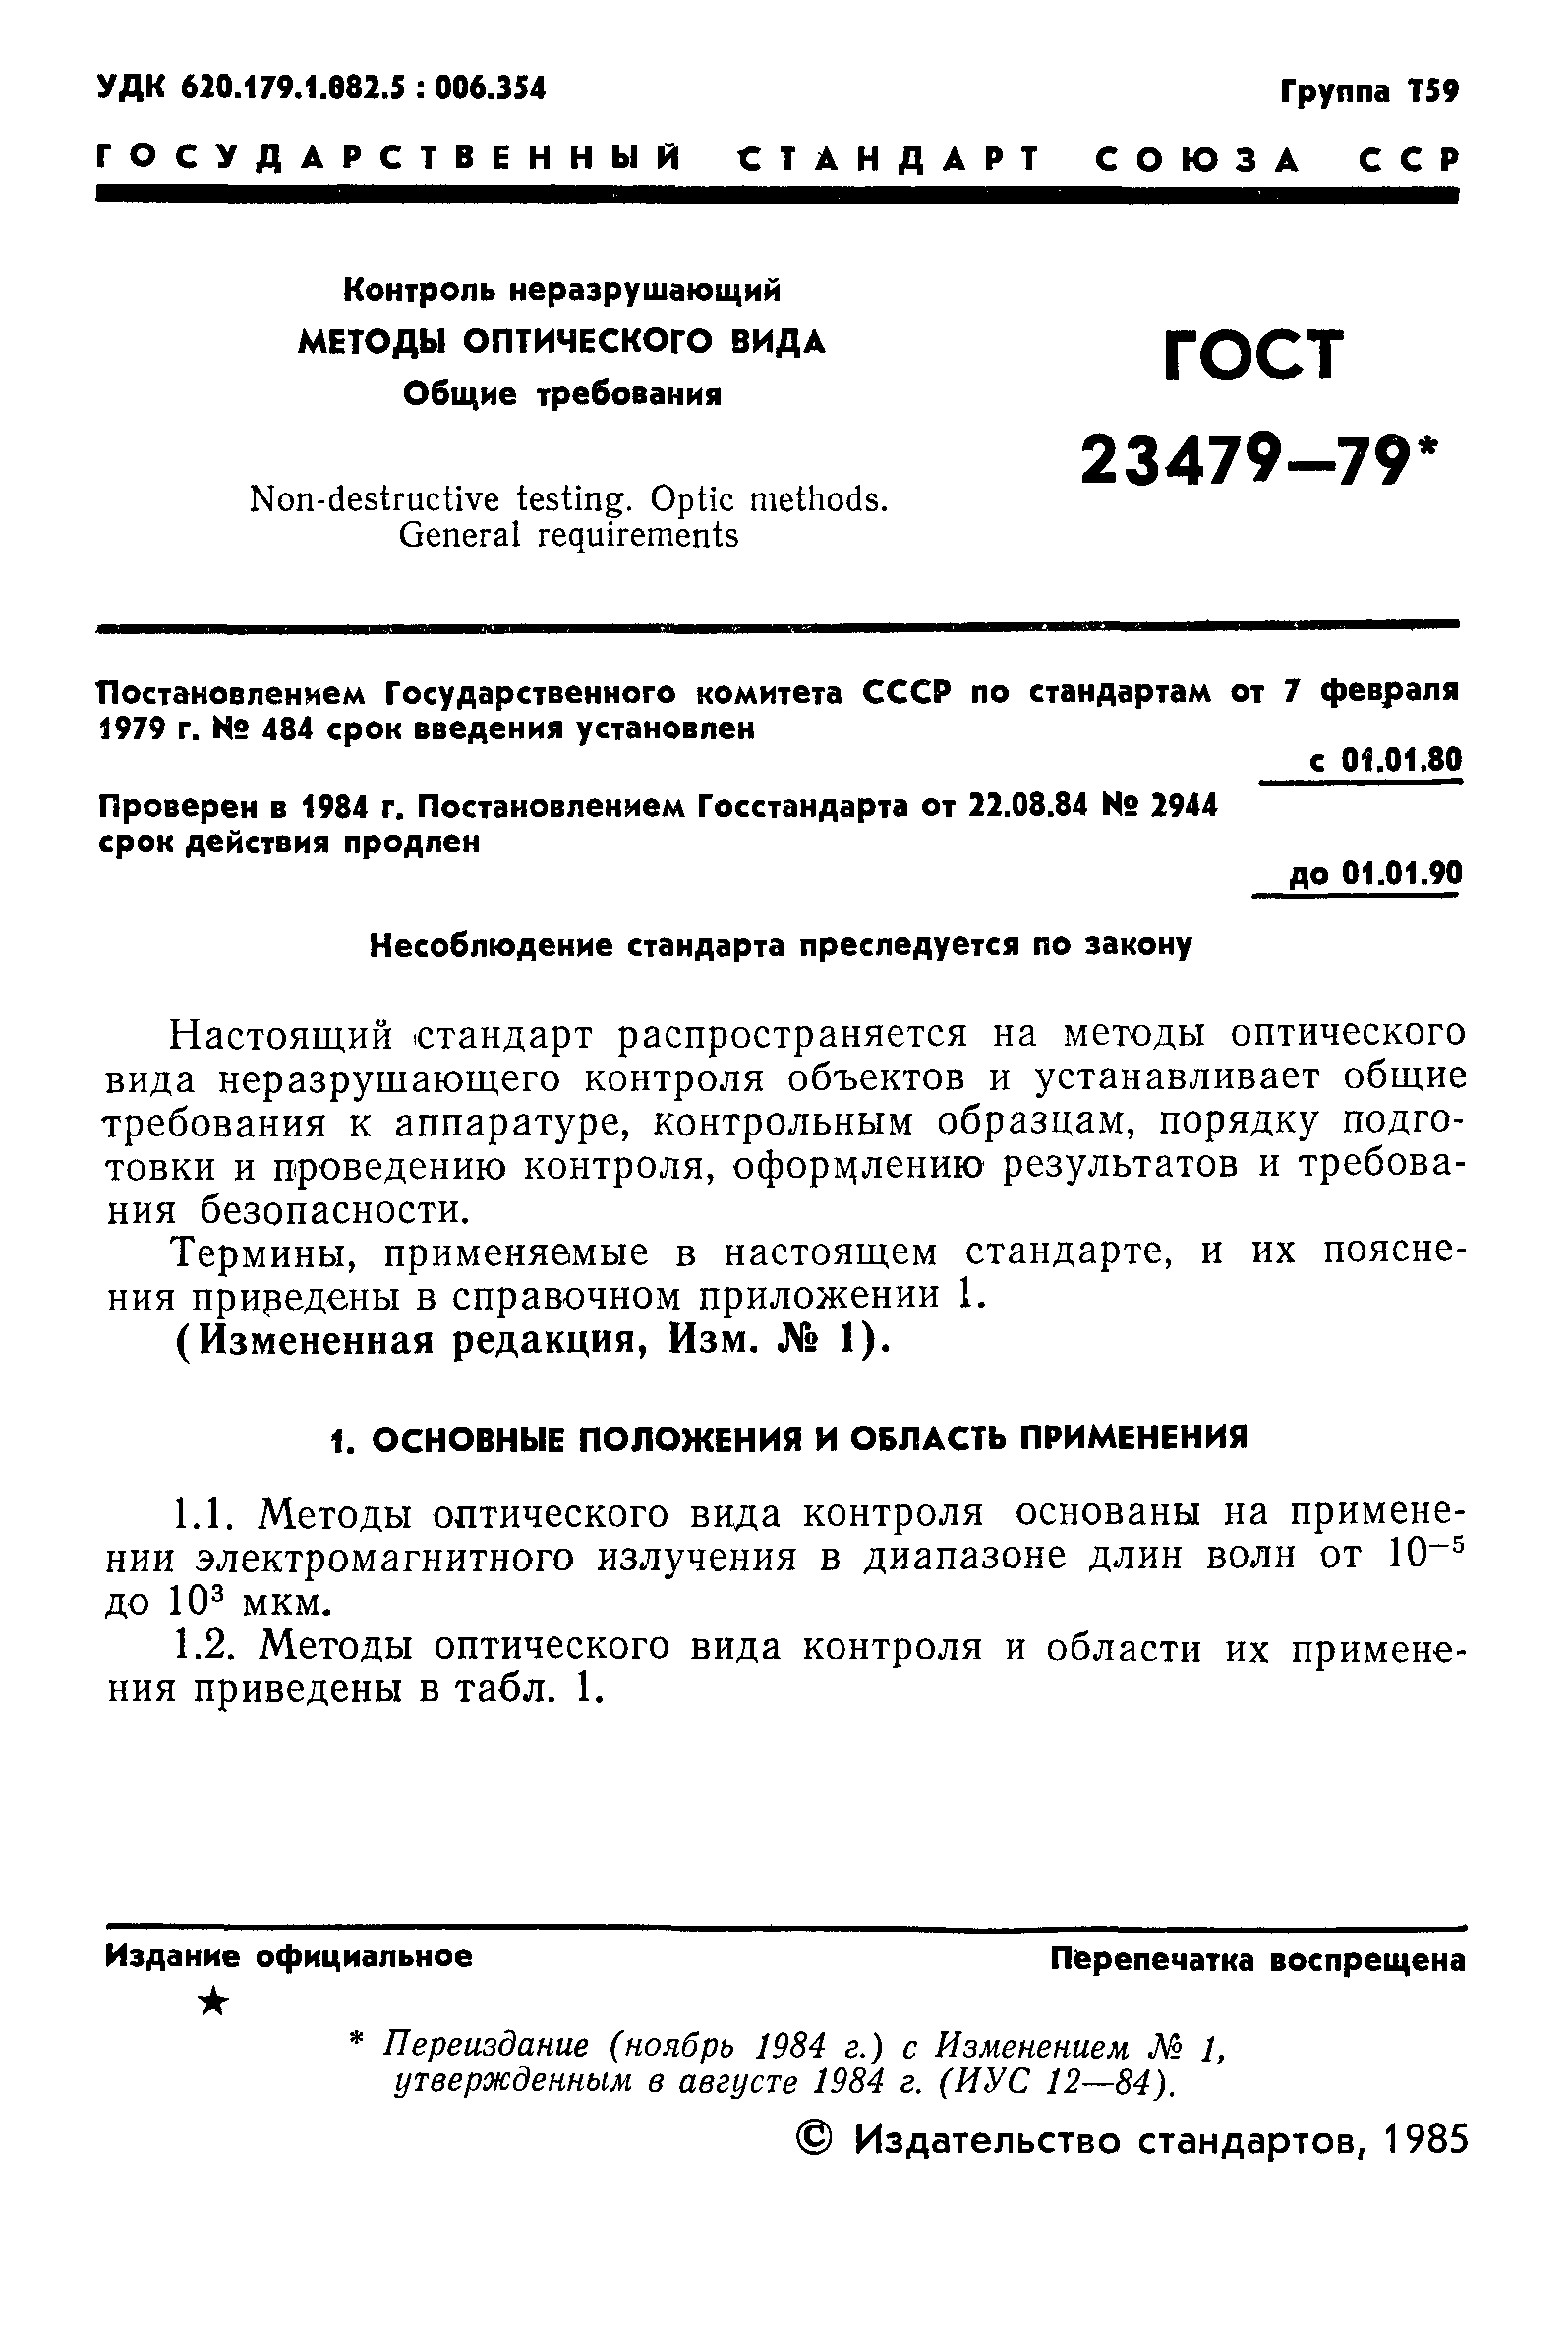 ГОСТ 23479-79